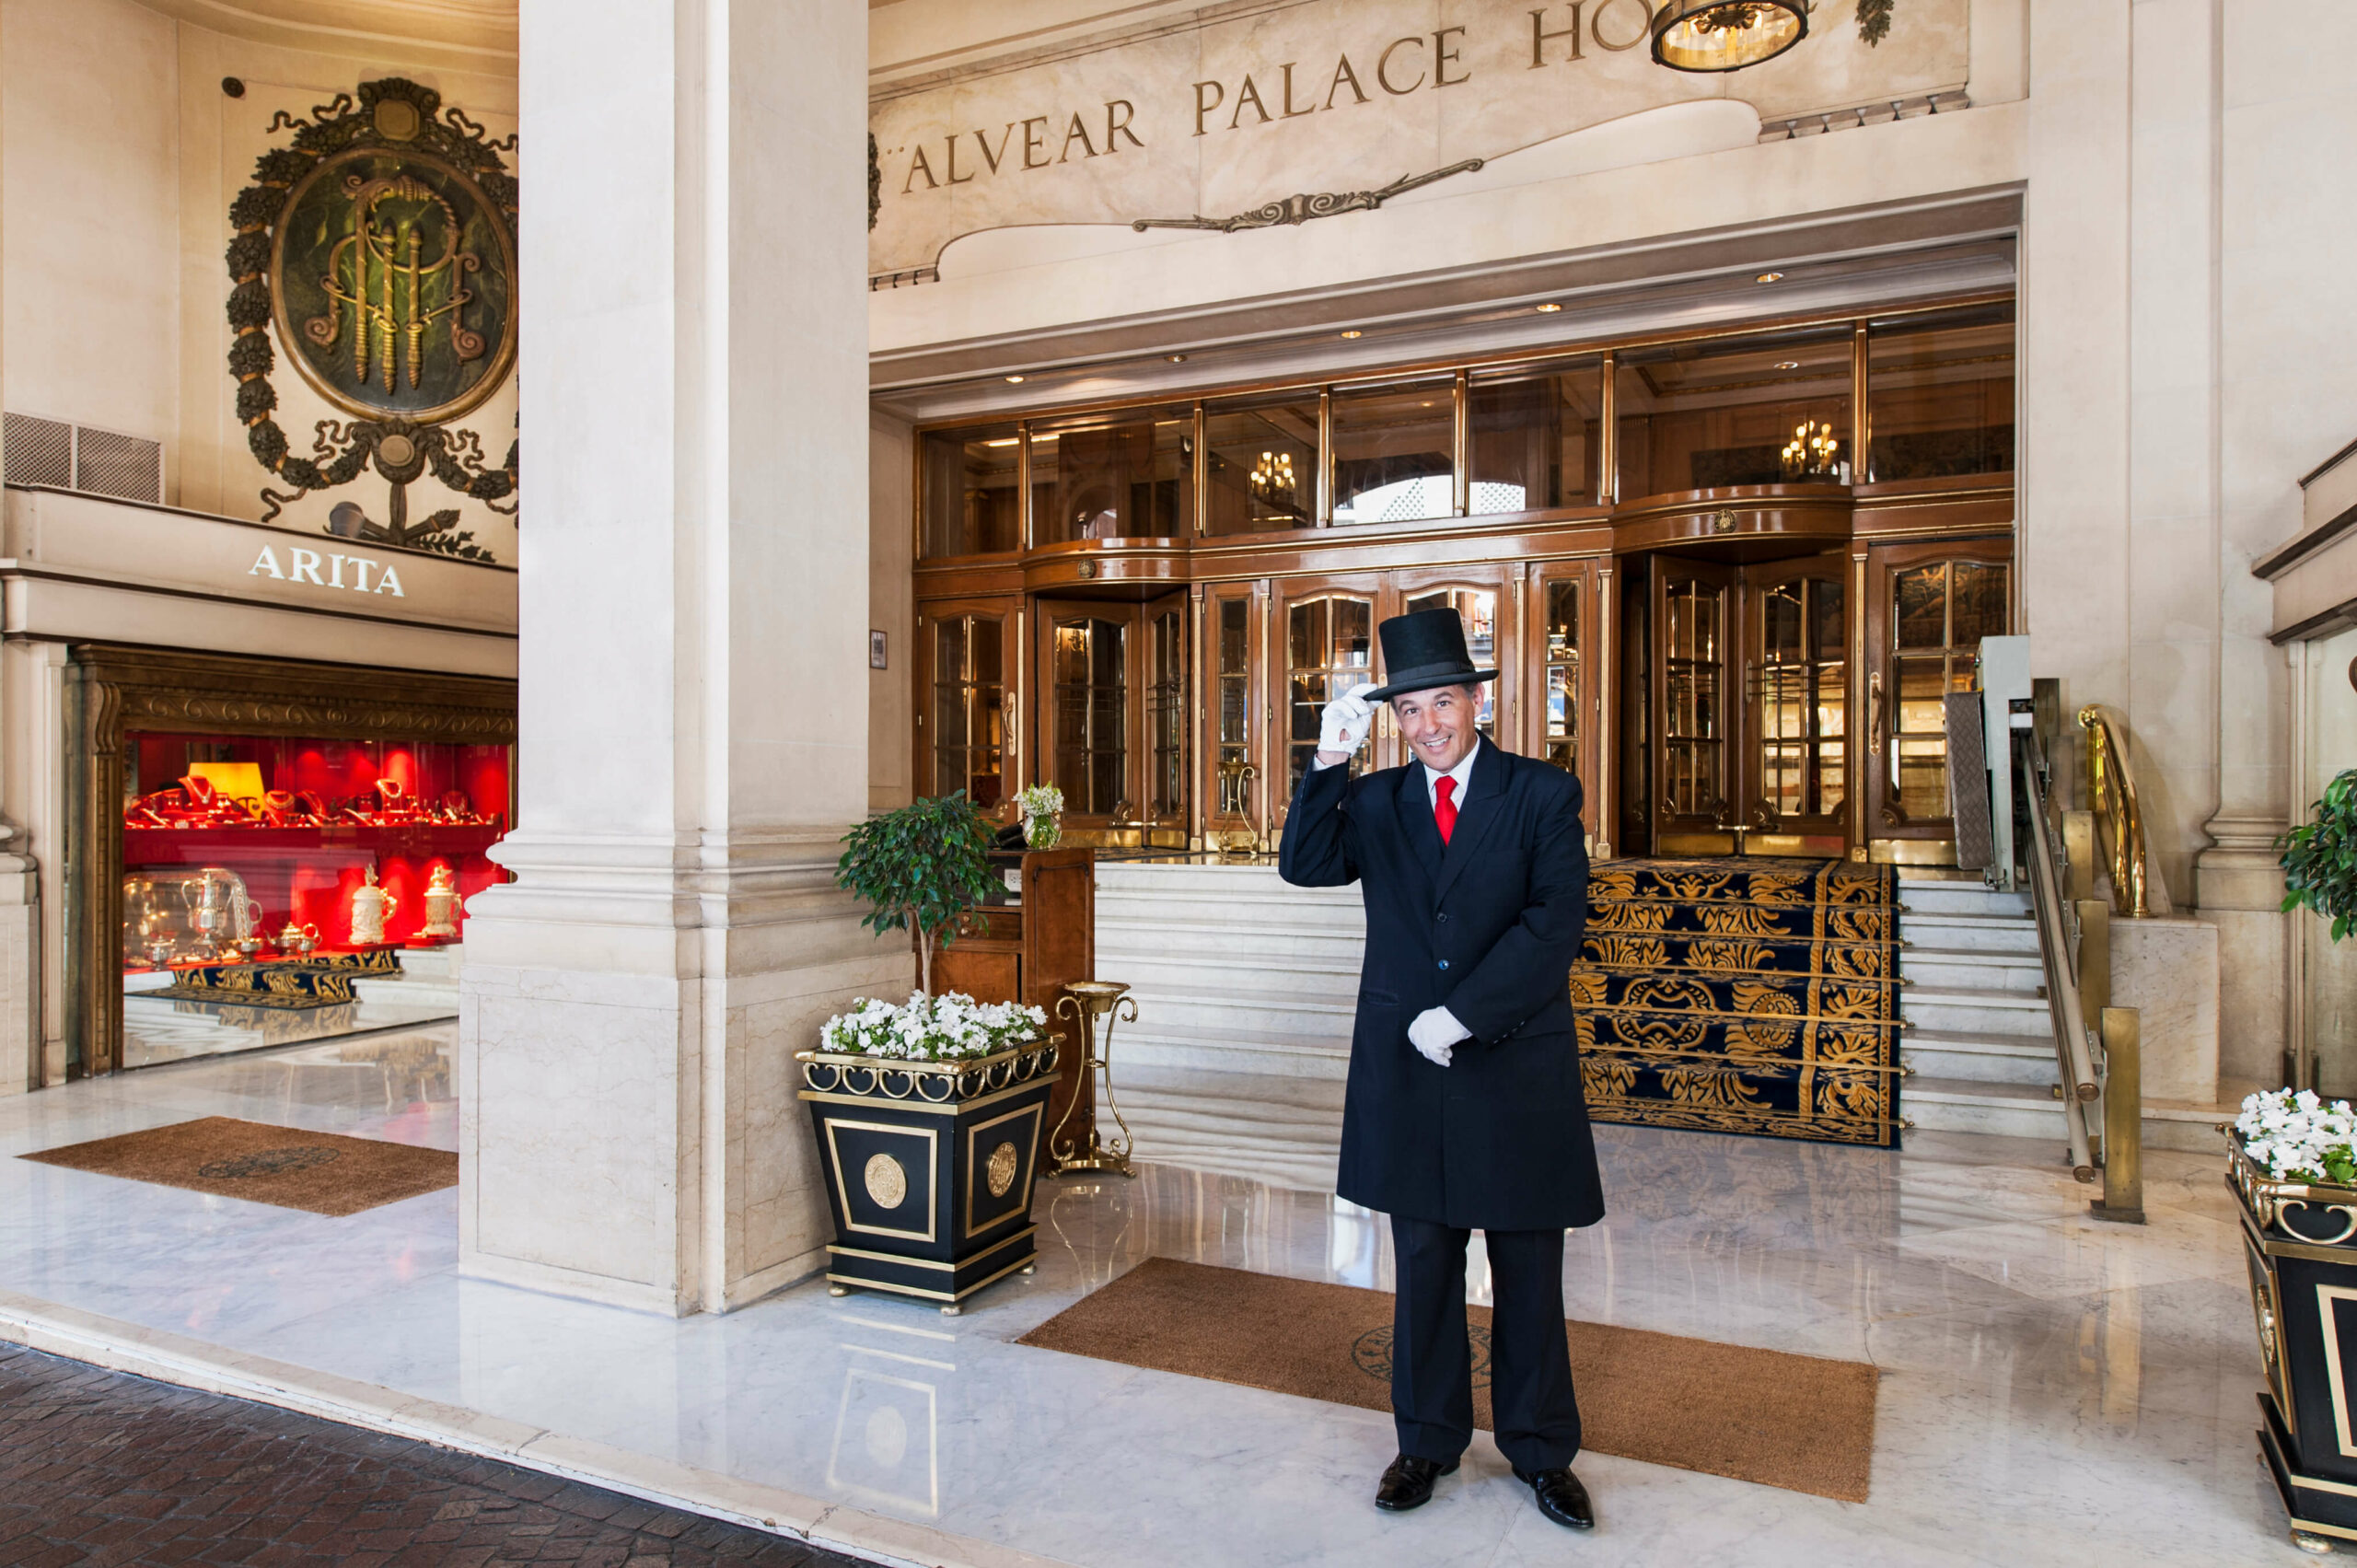 hotel alvear palace